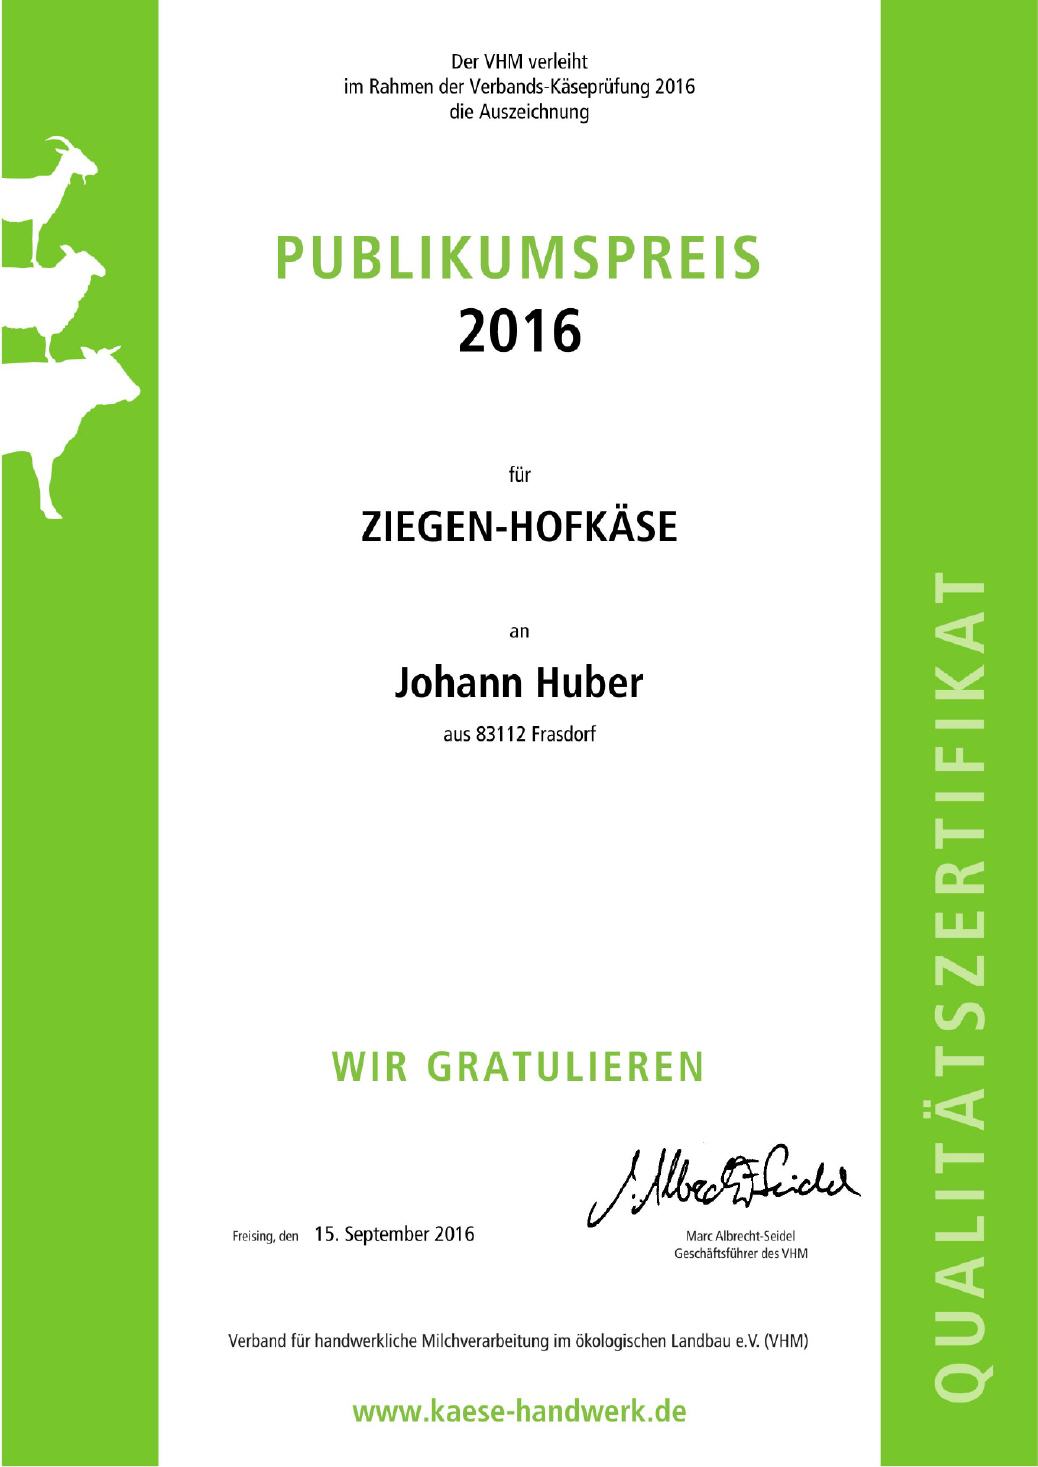 Publikumspreis Ziegen-Hofkäse 2016